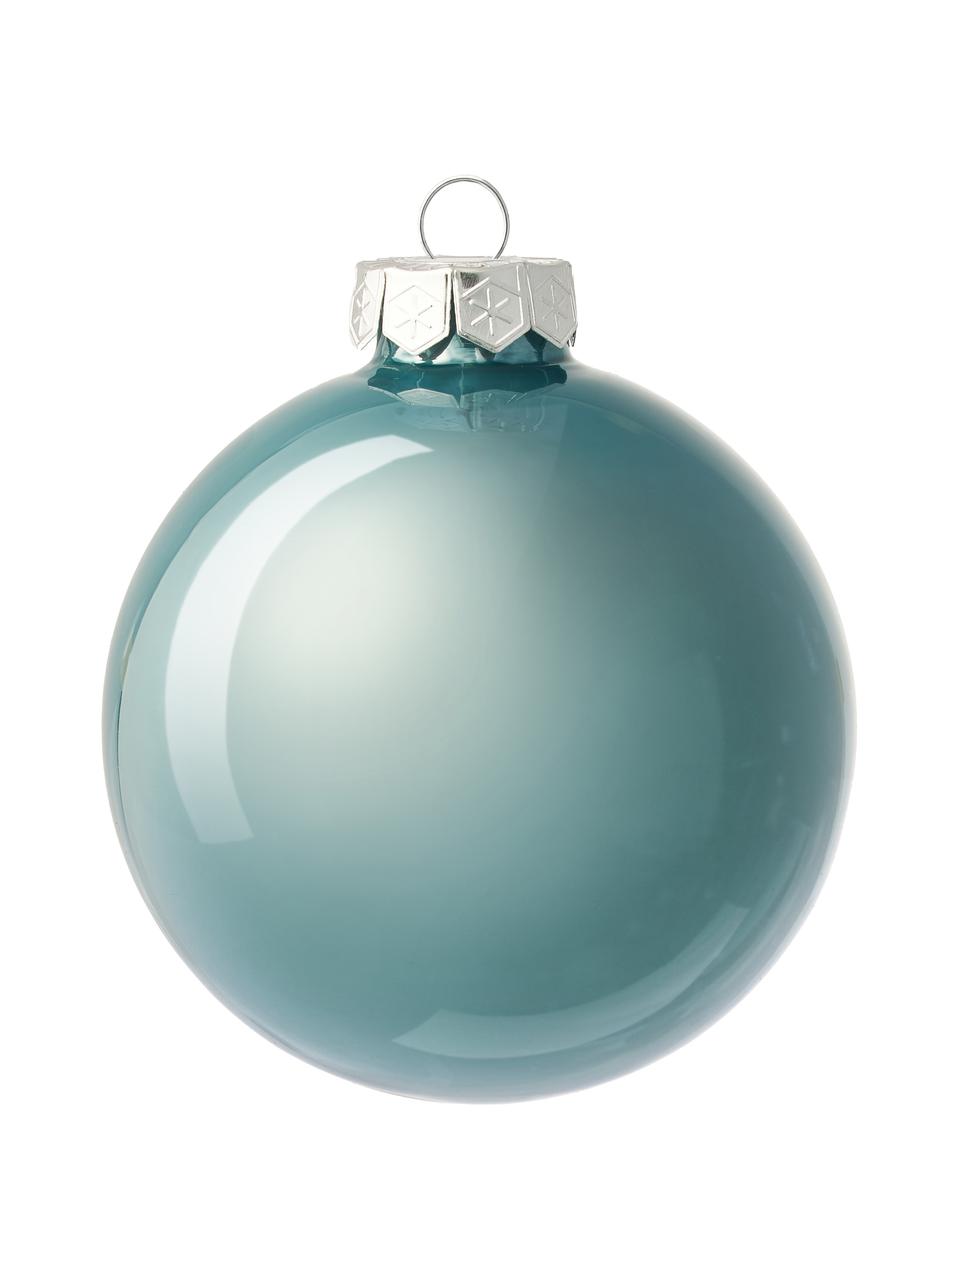 Boules de Noël Evergreen, 6 pièces, Bleu ciel, Ø 8 cm, 6 pièces